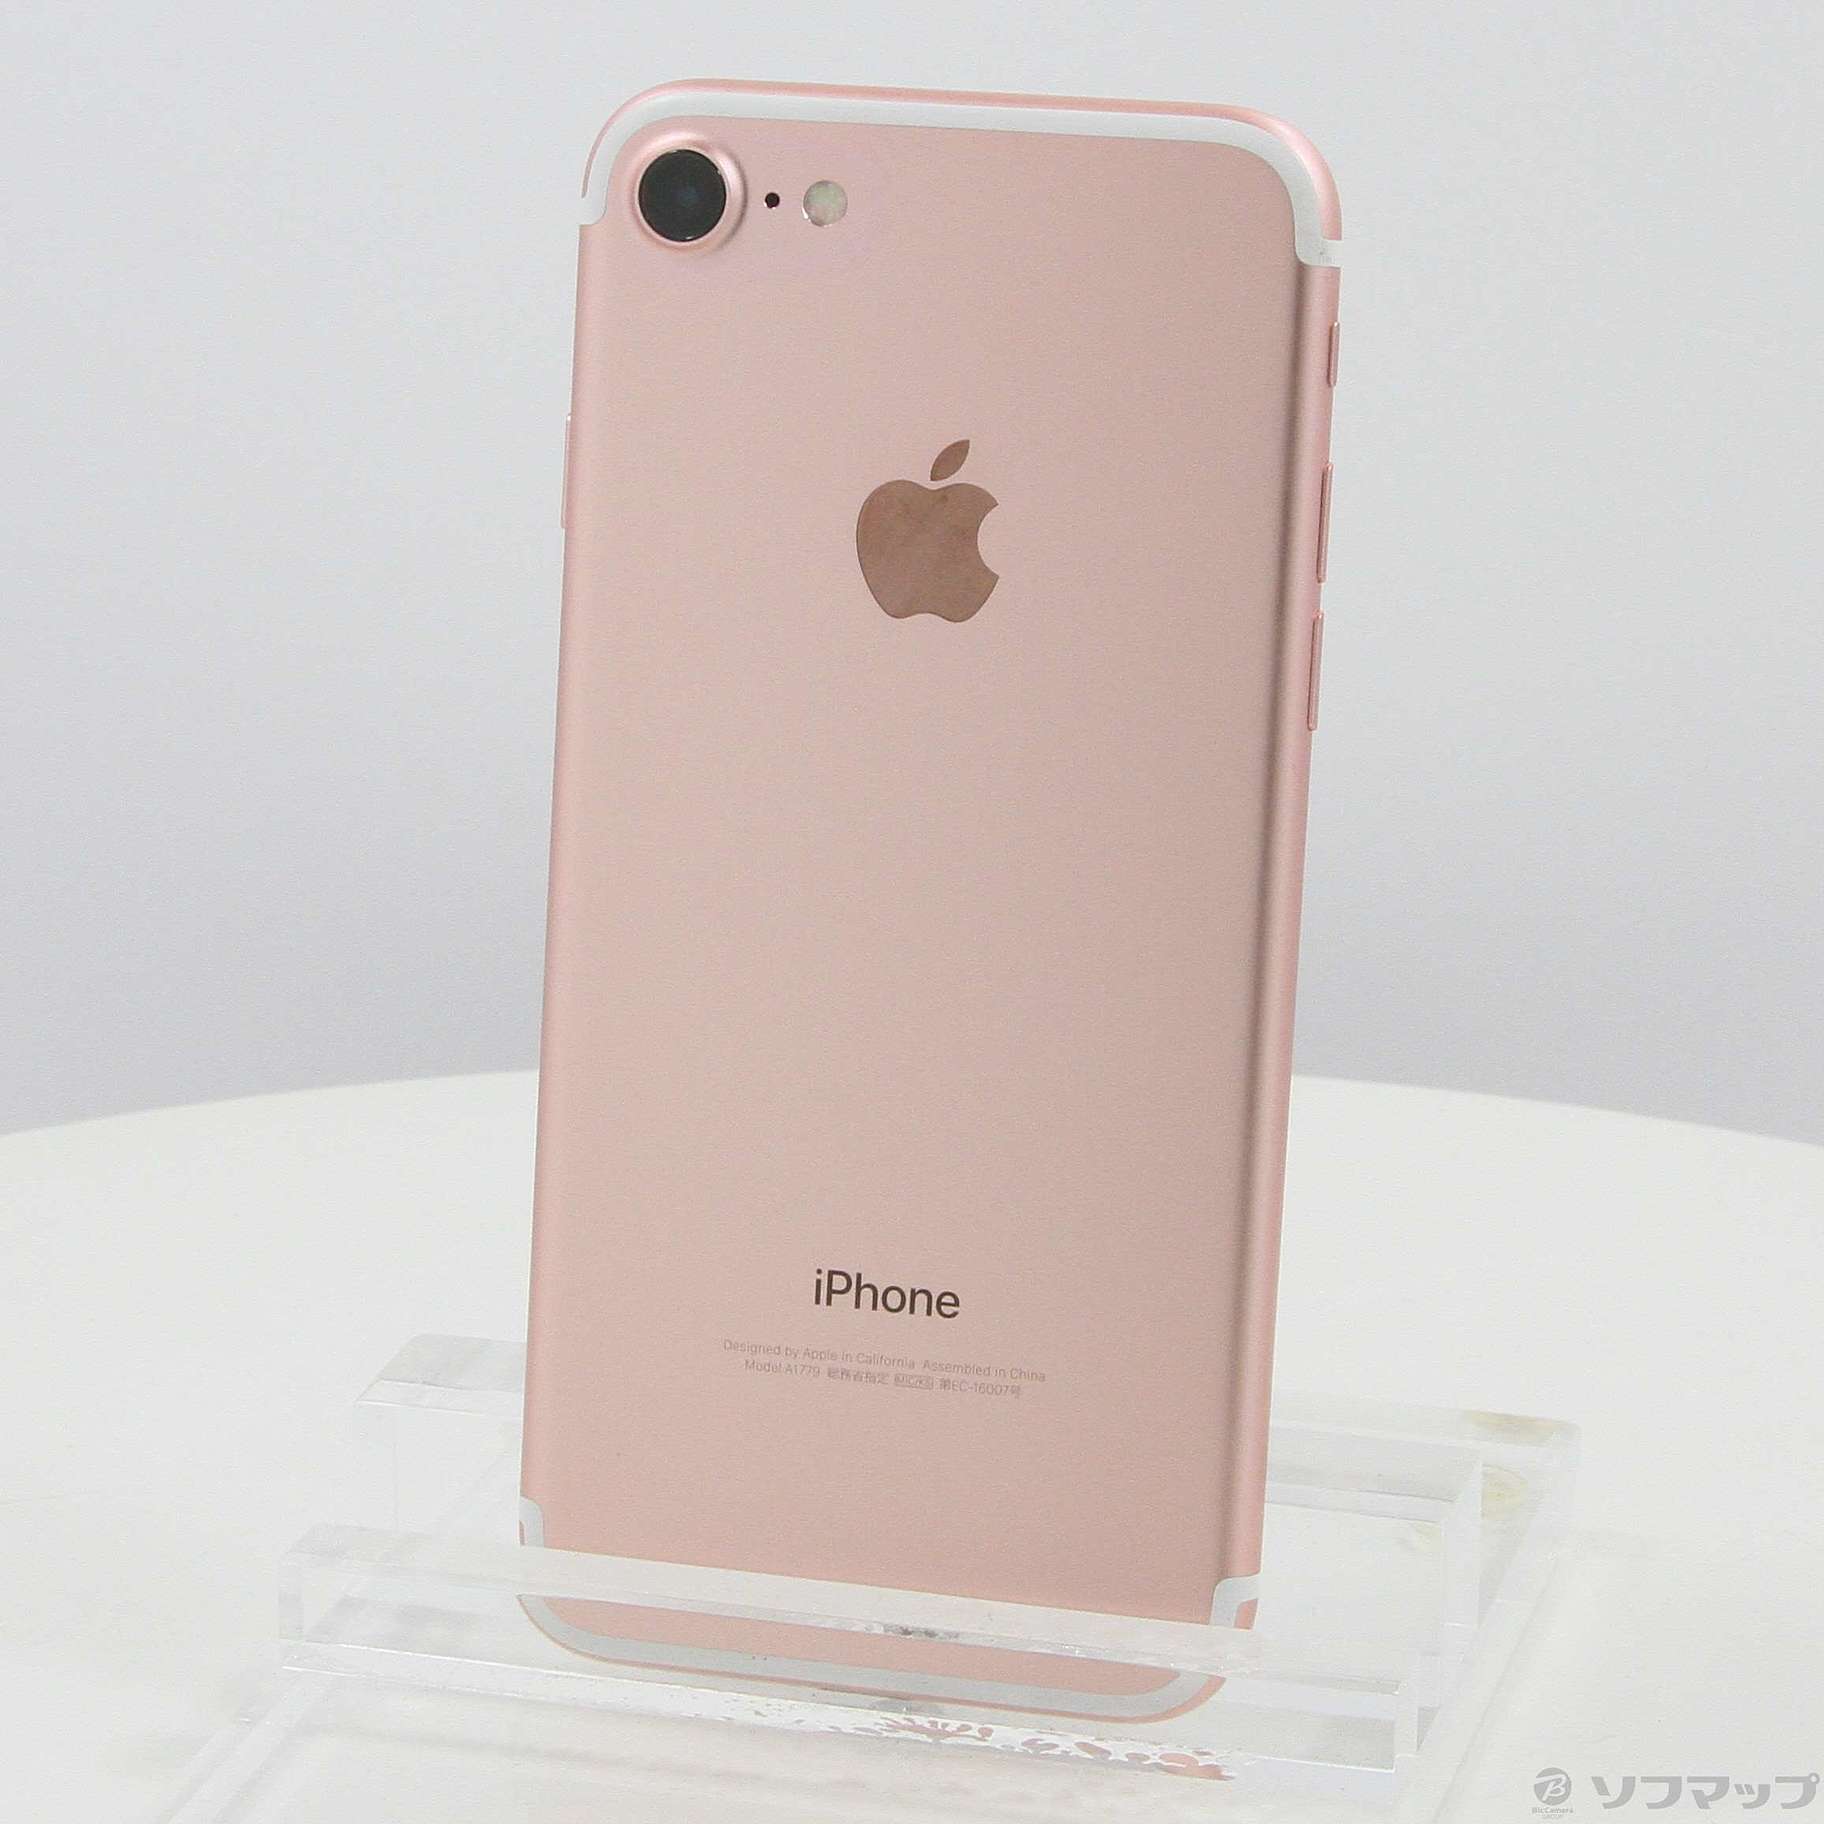 iPhone 7 Rose Gold 128 GB ソフトバンク